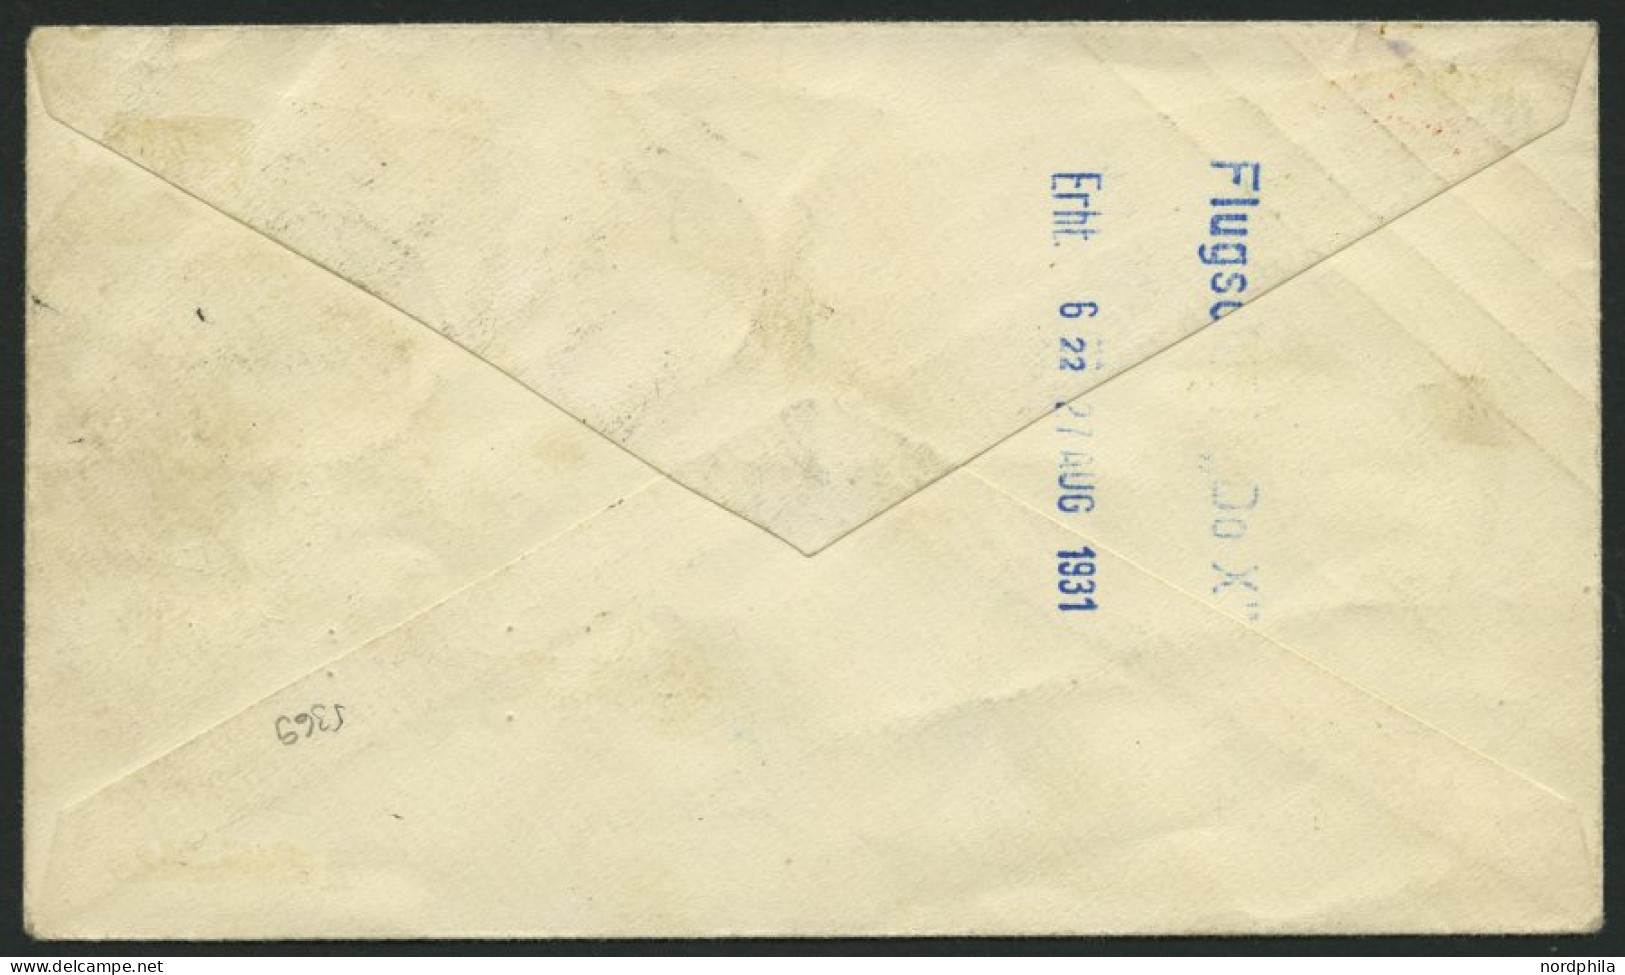 DO-X LUFTPOST DO X2.001.CH BRIEF, 31.08.1931, DO X 2, Postabgabe Trimmis, Blauer Zweikreiser VOLO DI COLLAUDO, Prachtbri - First Flight Covers